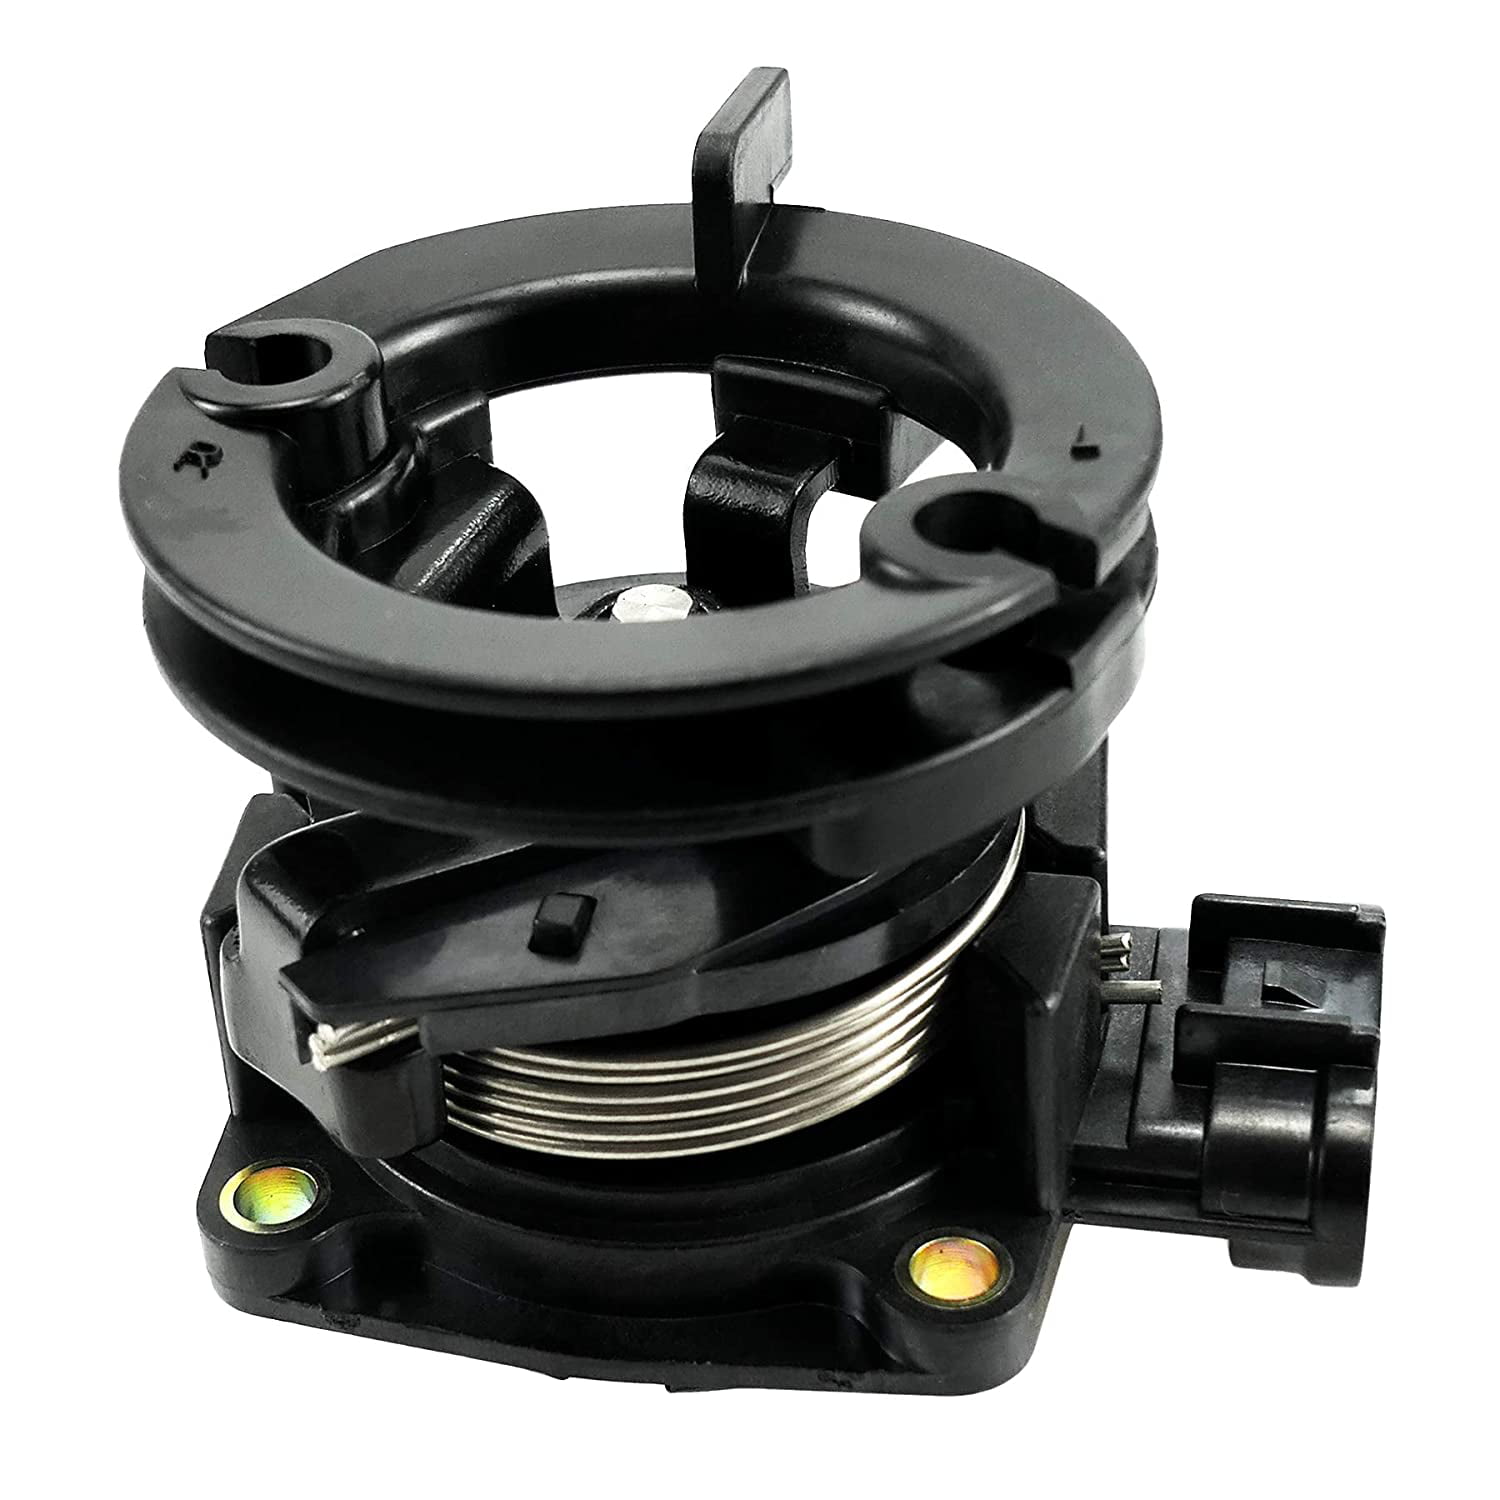 Throttle Body Lever Sensor Fits for Toyota Lexus GS300 GS430 IS300 2001-2005 GS400 2000 22060-46070 